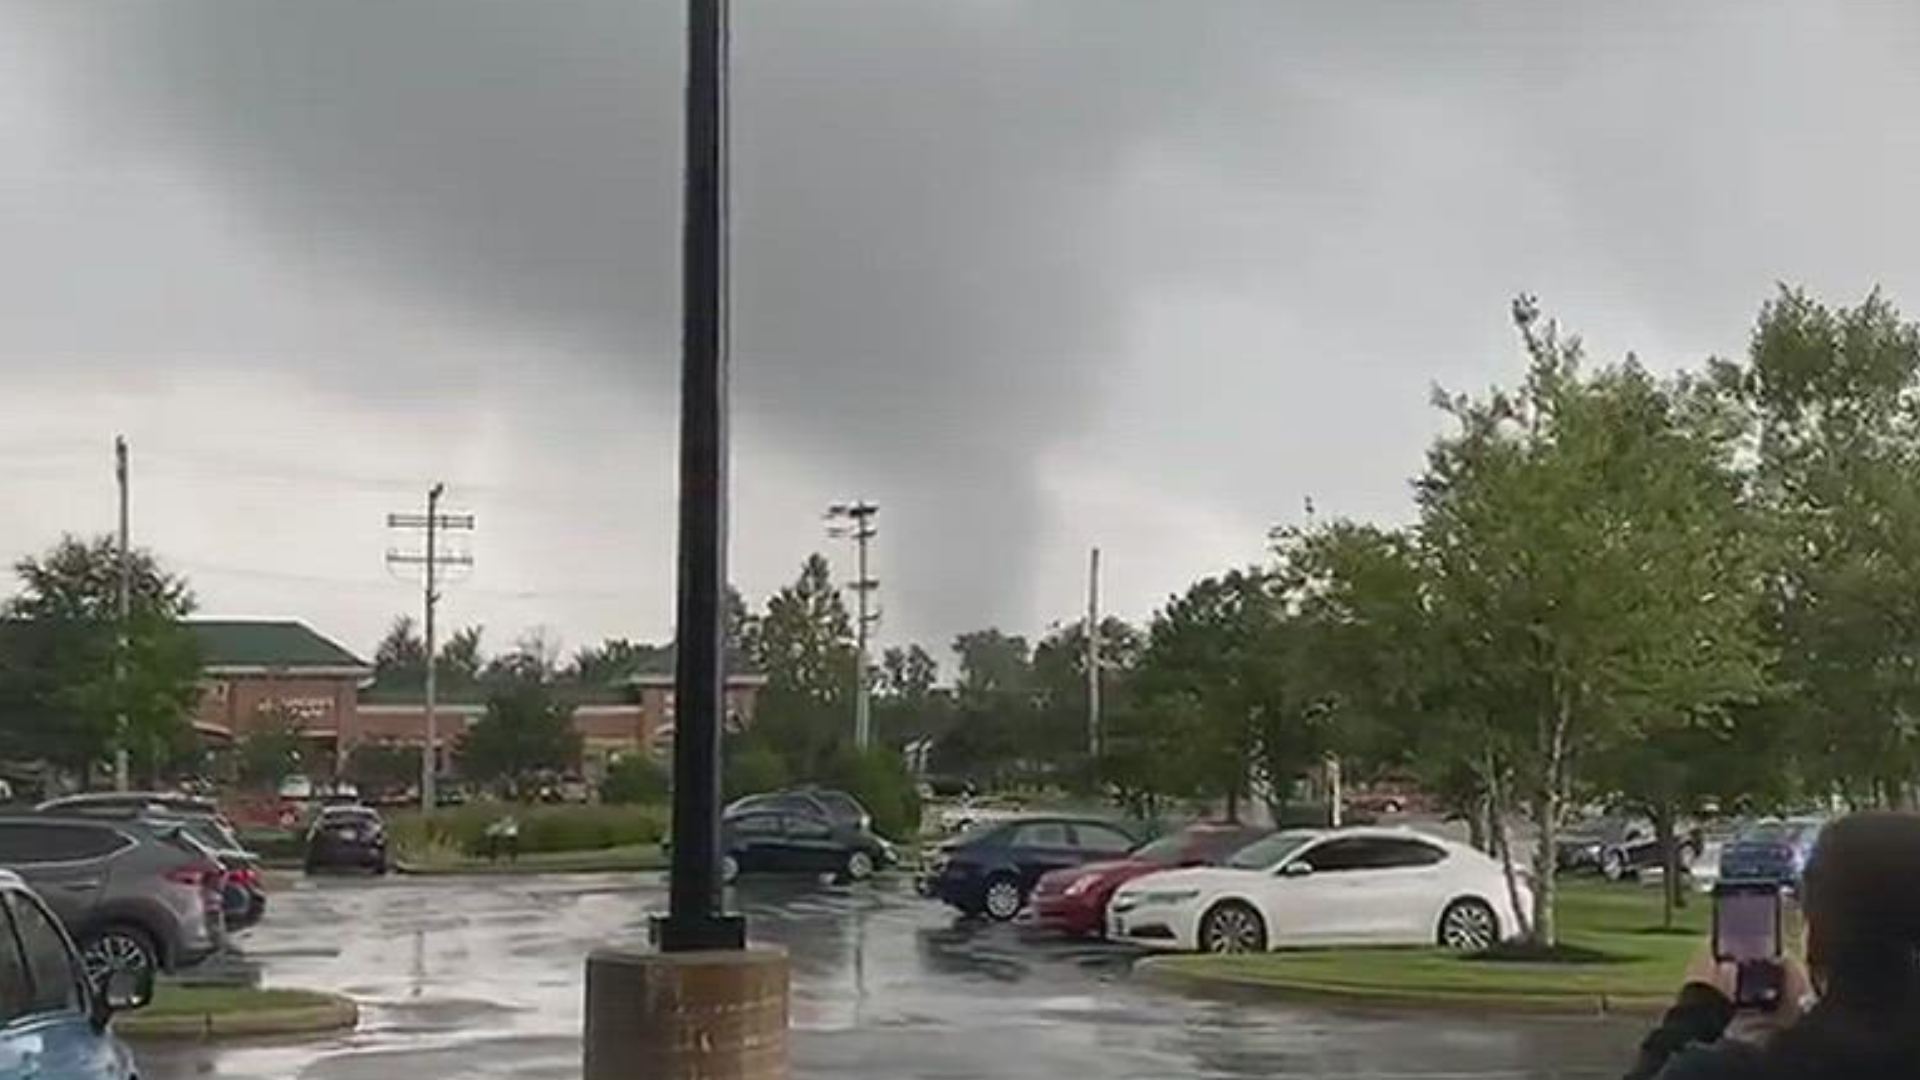 Tornado in Edgewater Maryland
Credit: Erica Lomax